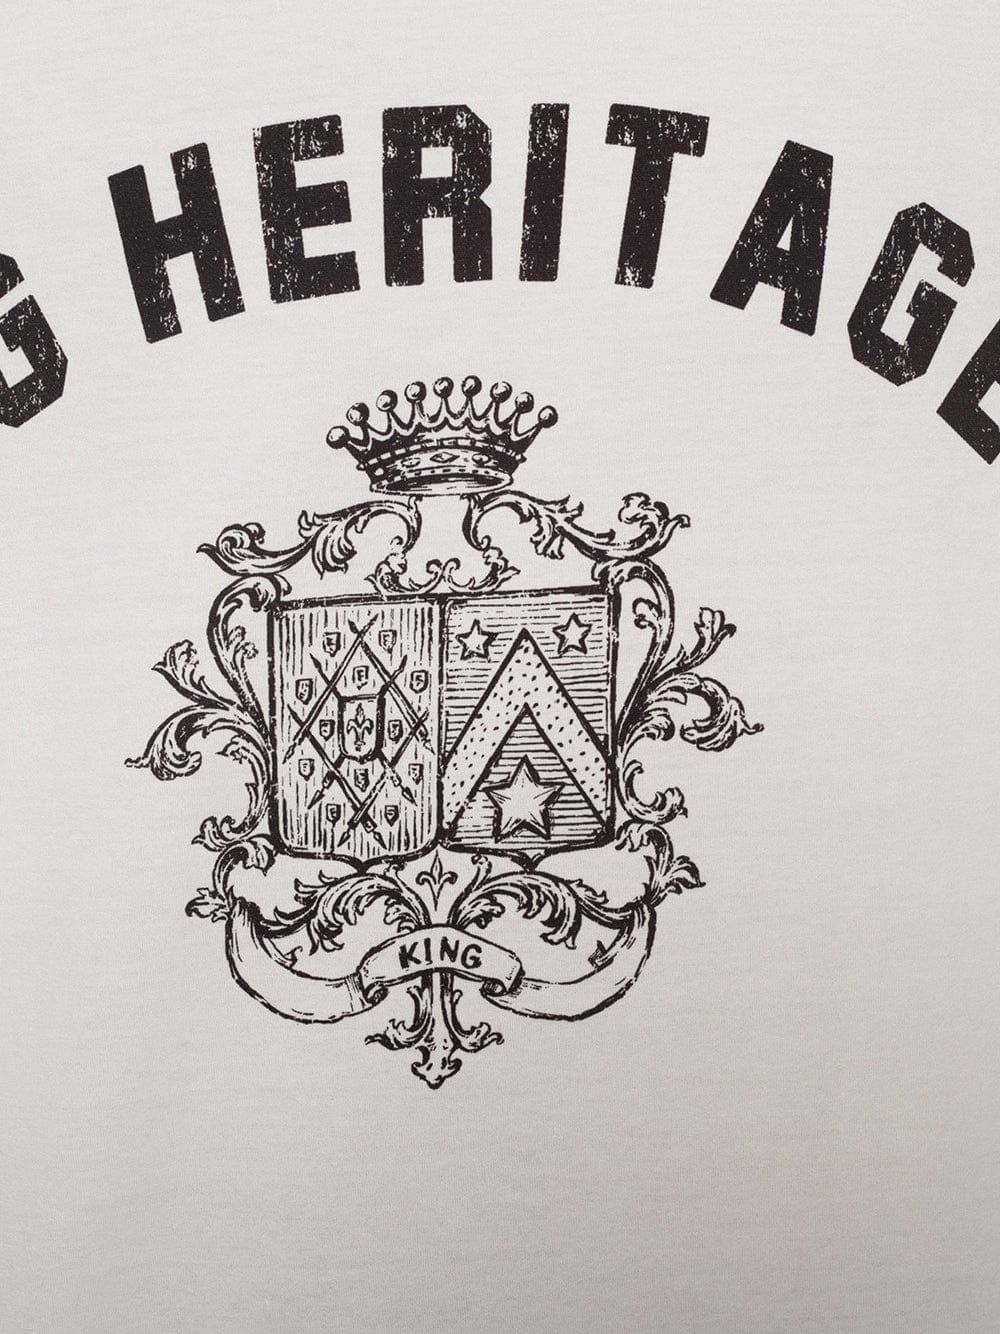 Dolce & Gabbana Heritage Print T-Shirt